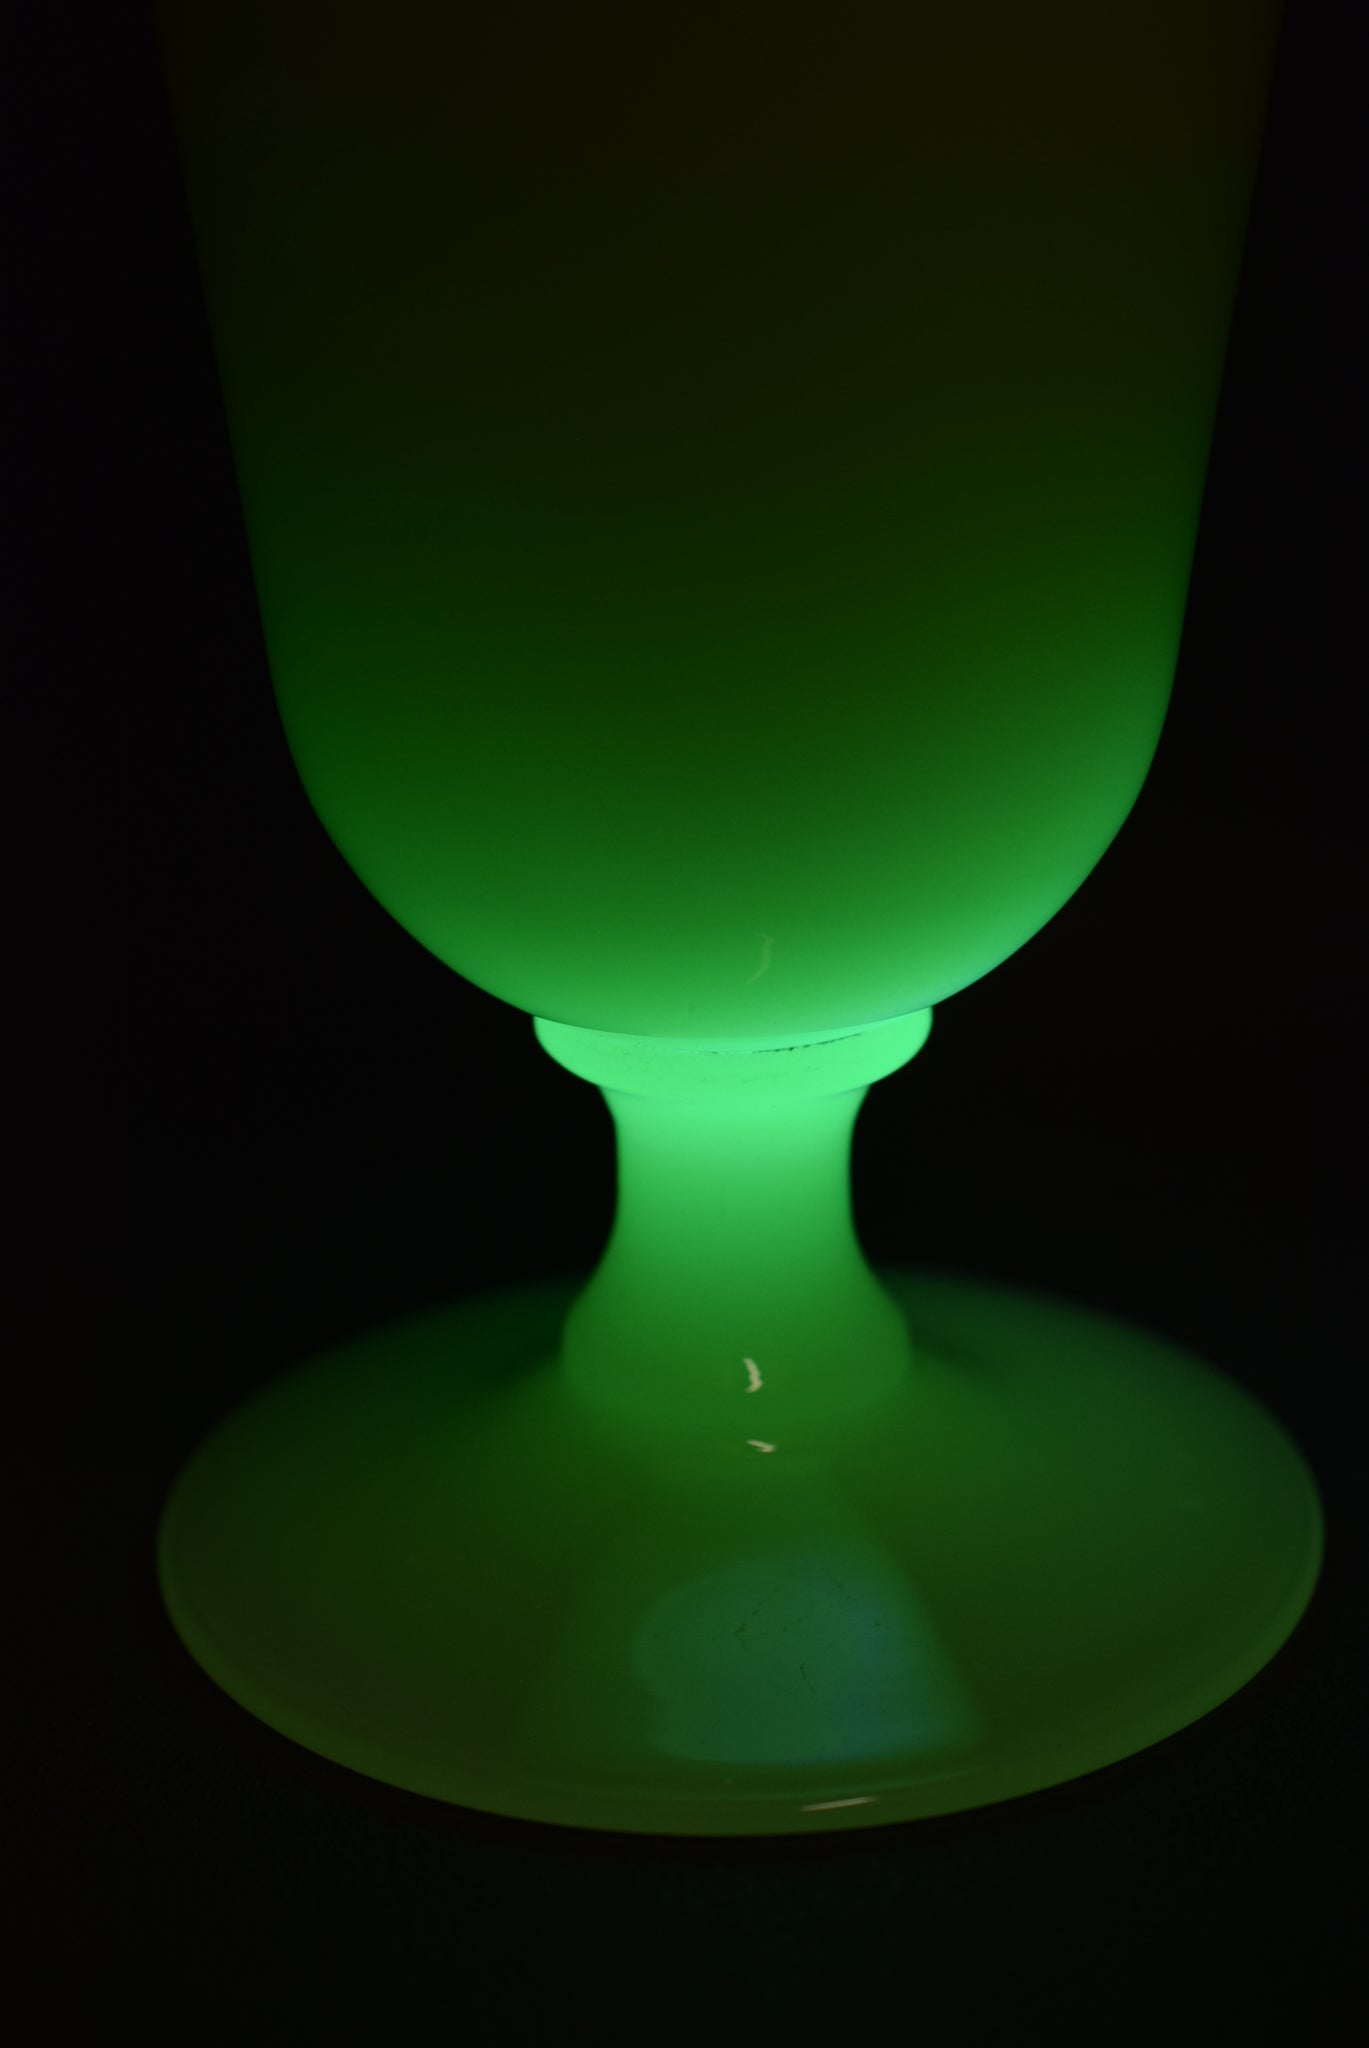 Uranium Vaseline Opaline Vase Yellow Milk Glass